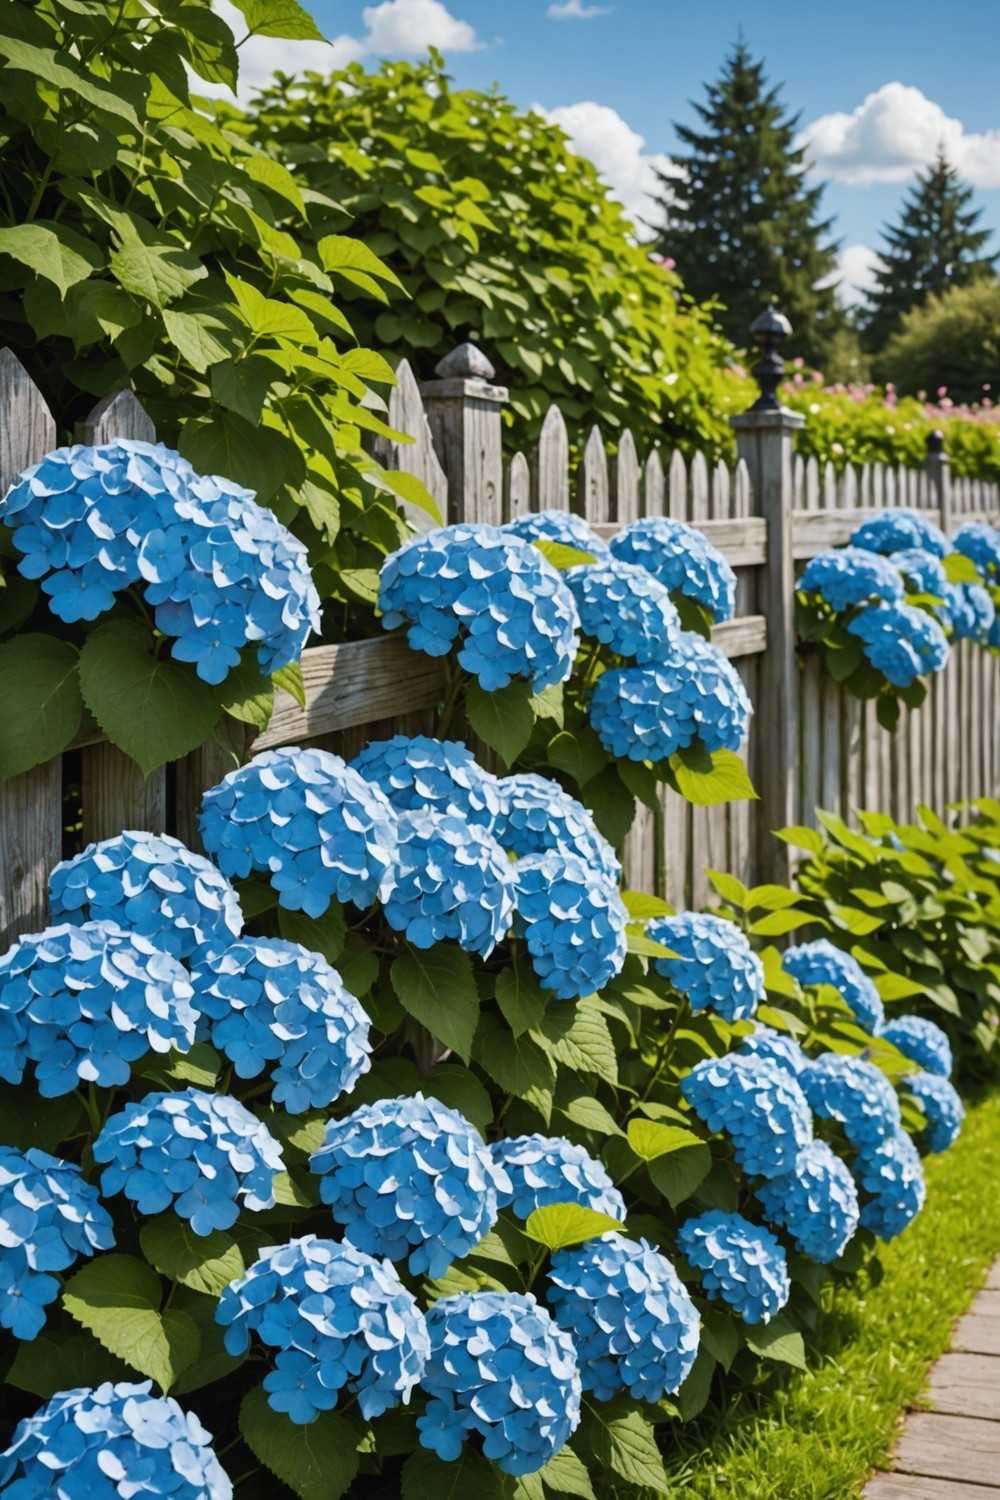 Hydrangea Bushes Along a Fence